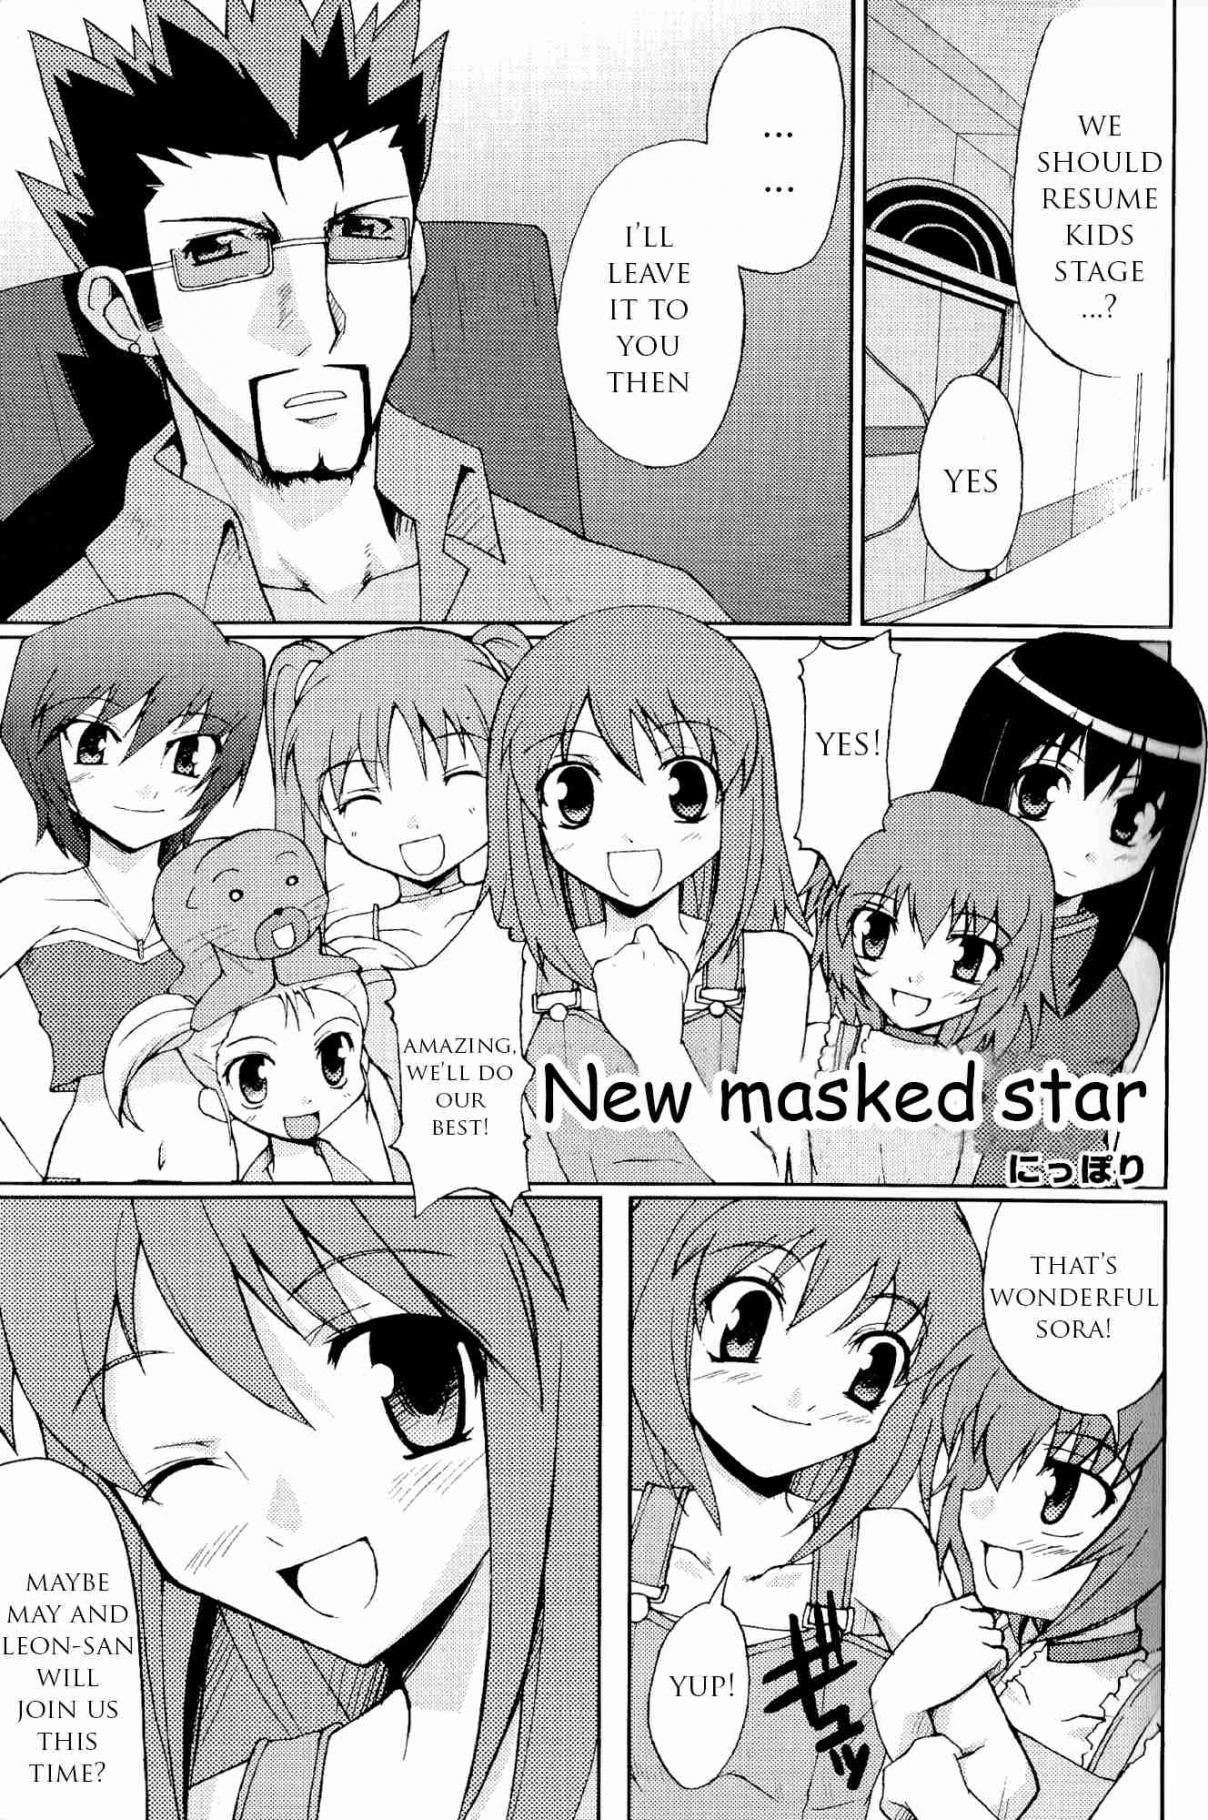 Kaleido Star Comic Anthology Vol. 1 Ch. 11 New amazing masked star